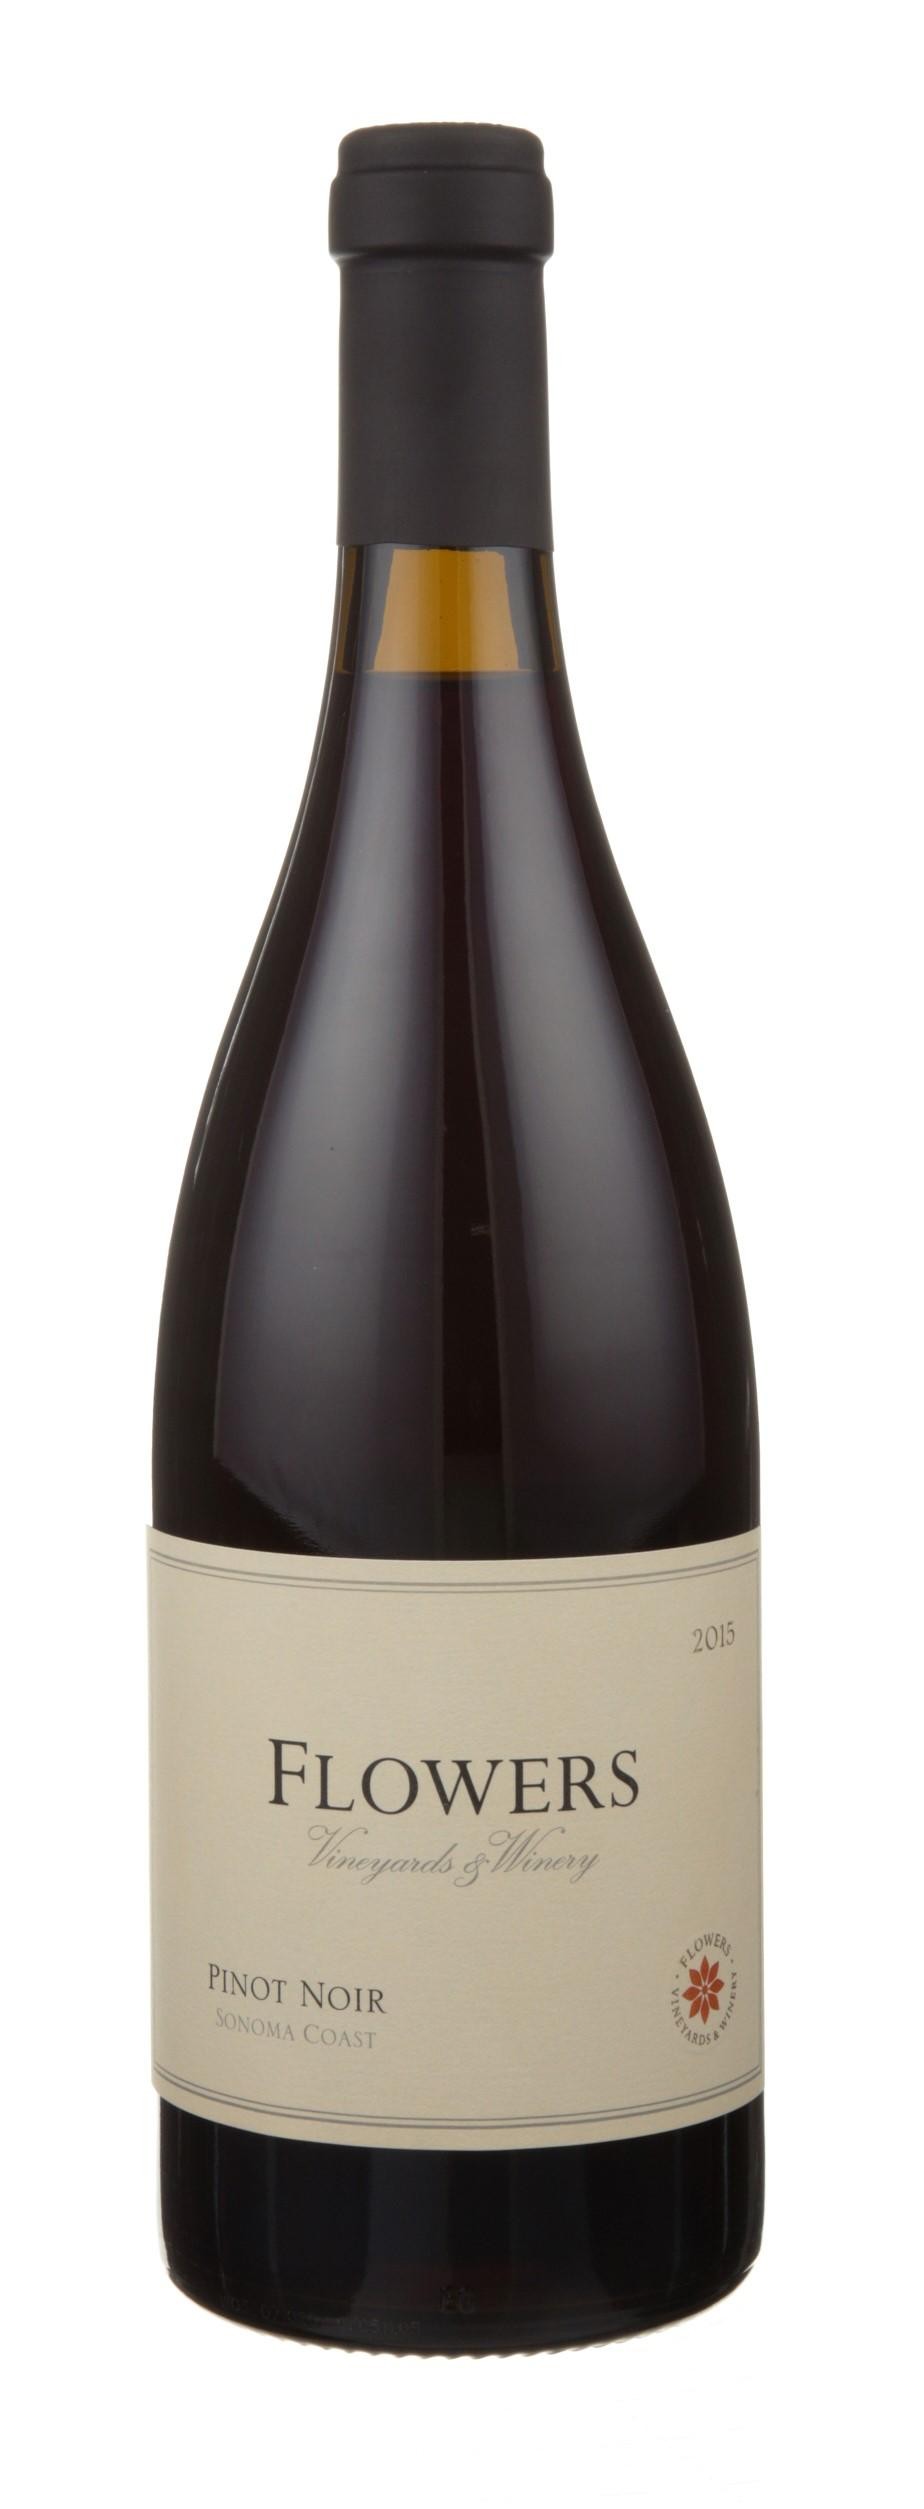 Flowers Sonoma Coast Pinot Noir - Red Wine from California - 750ml Bottle